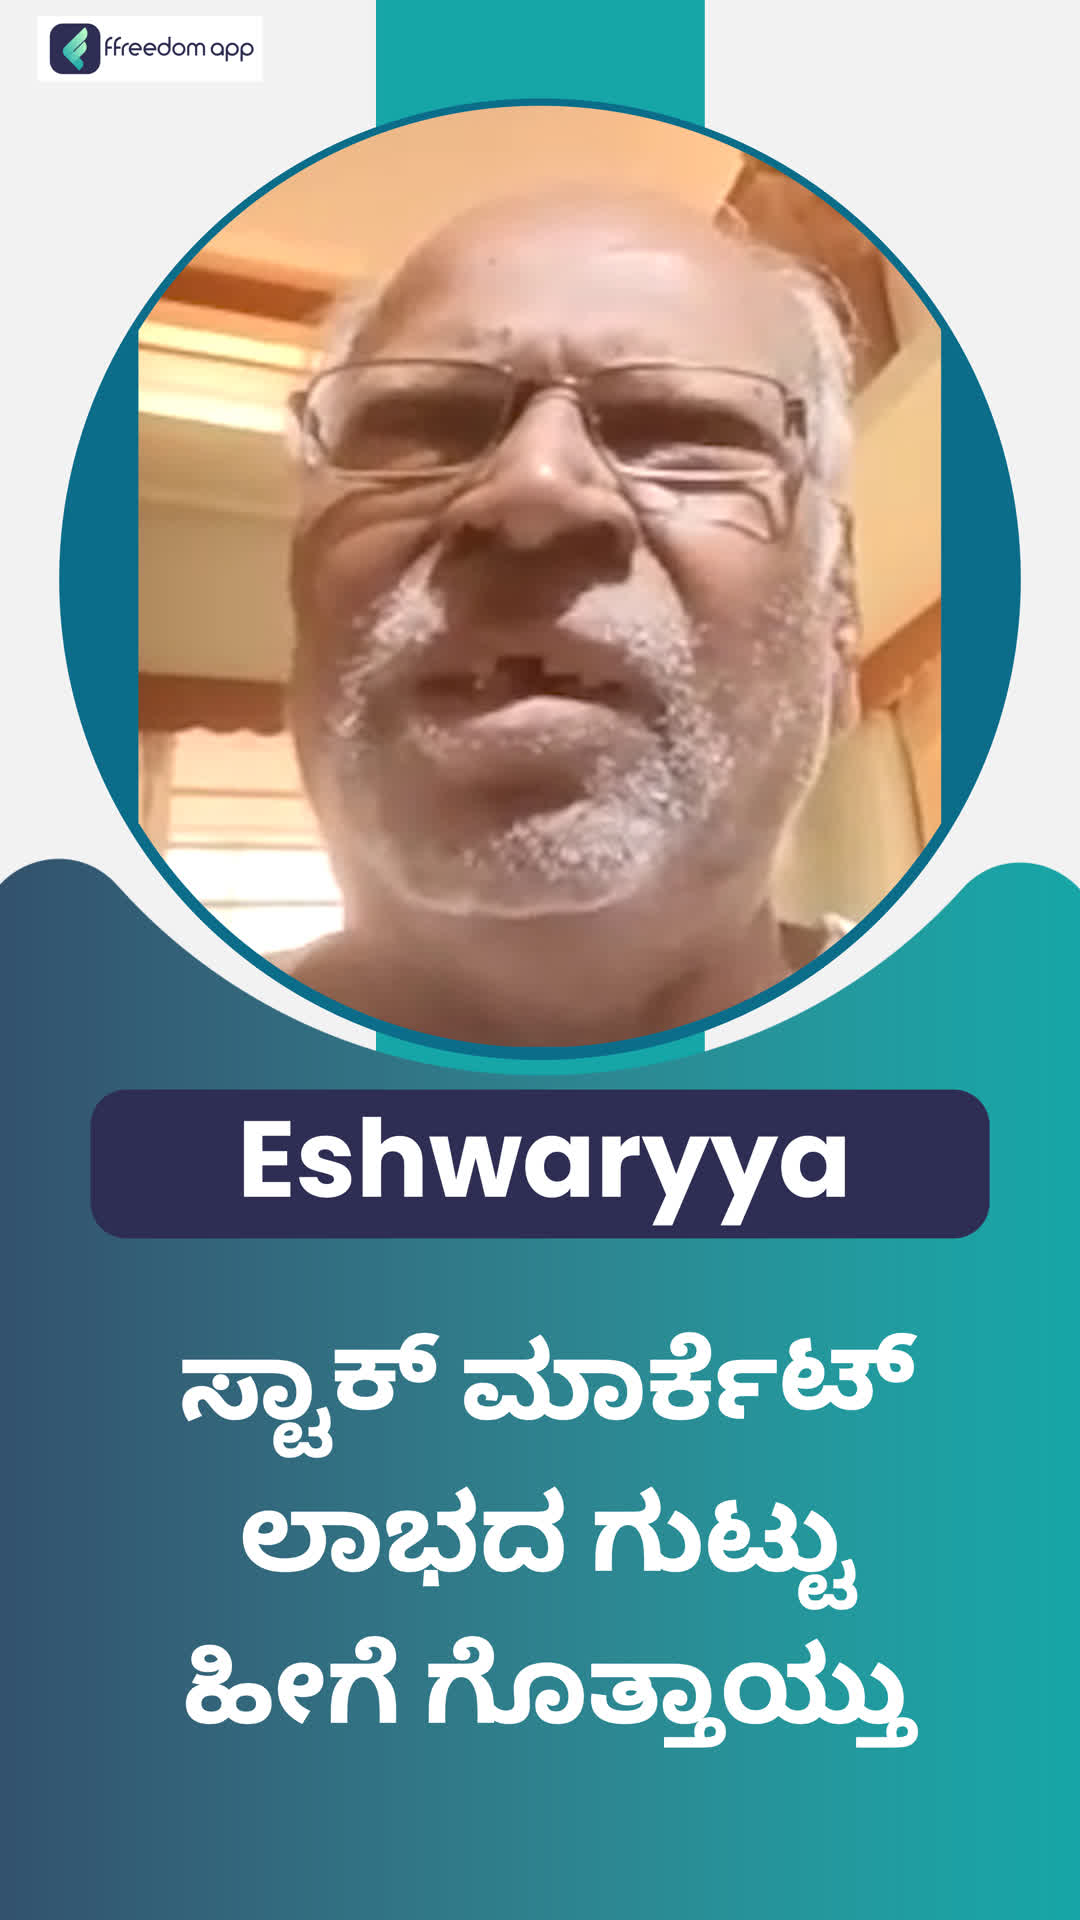 Eshwarayya's Honest Review of ffreedom app - Dharwad ,Maharashtra